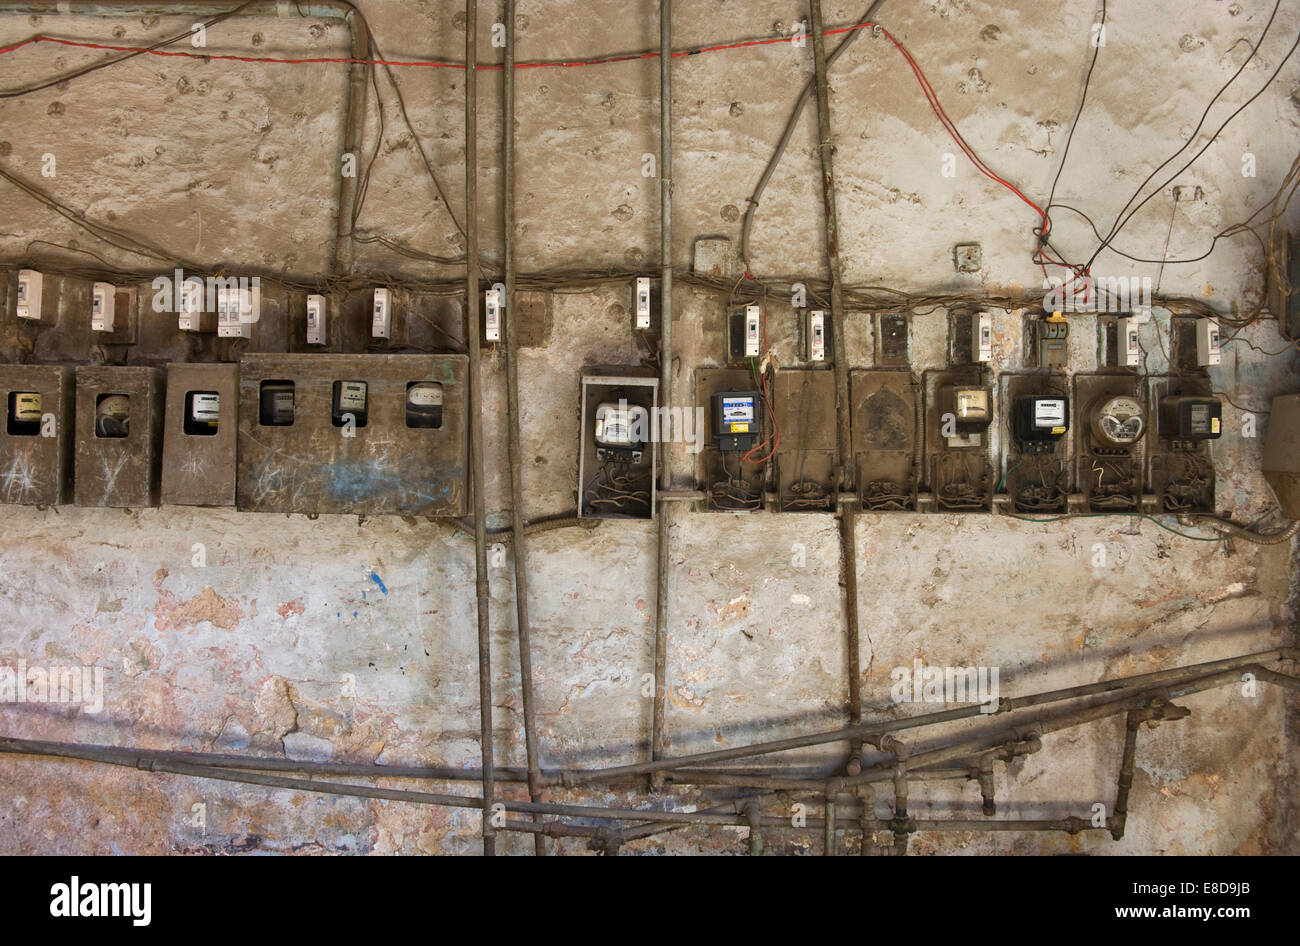 Antiquated electric meters, Havana, Cuba Stock Photo